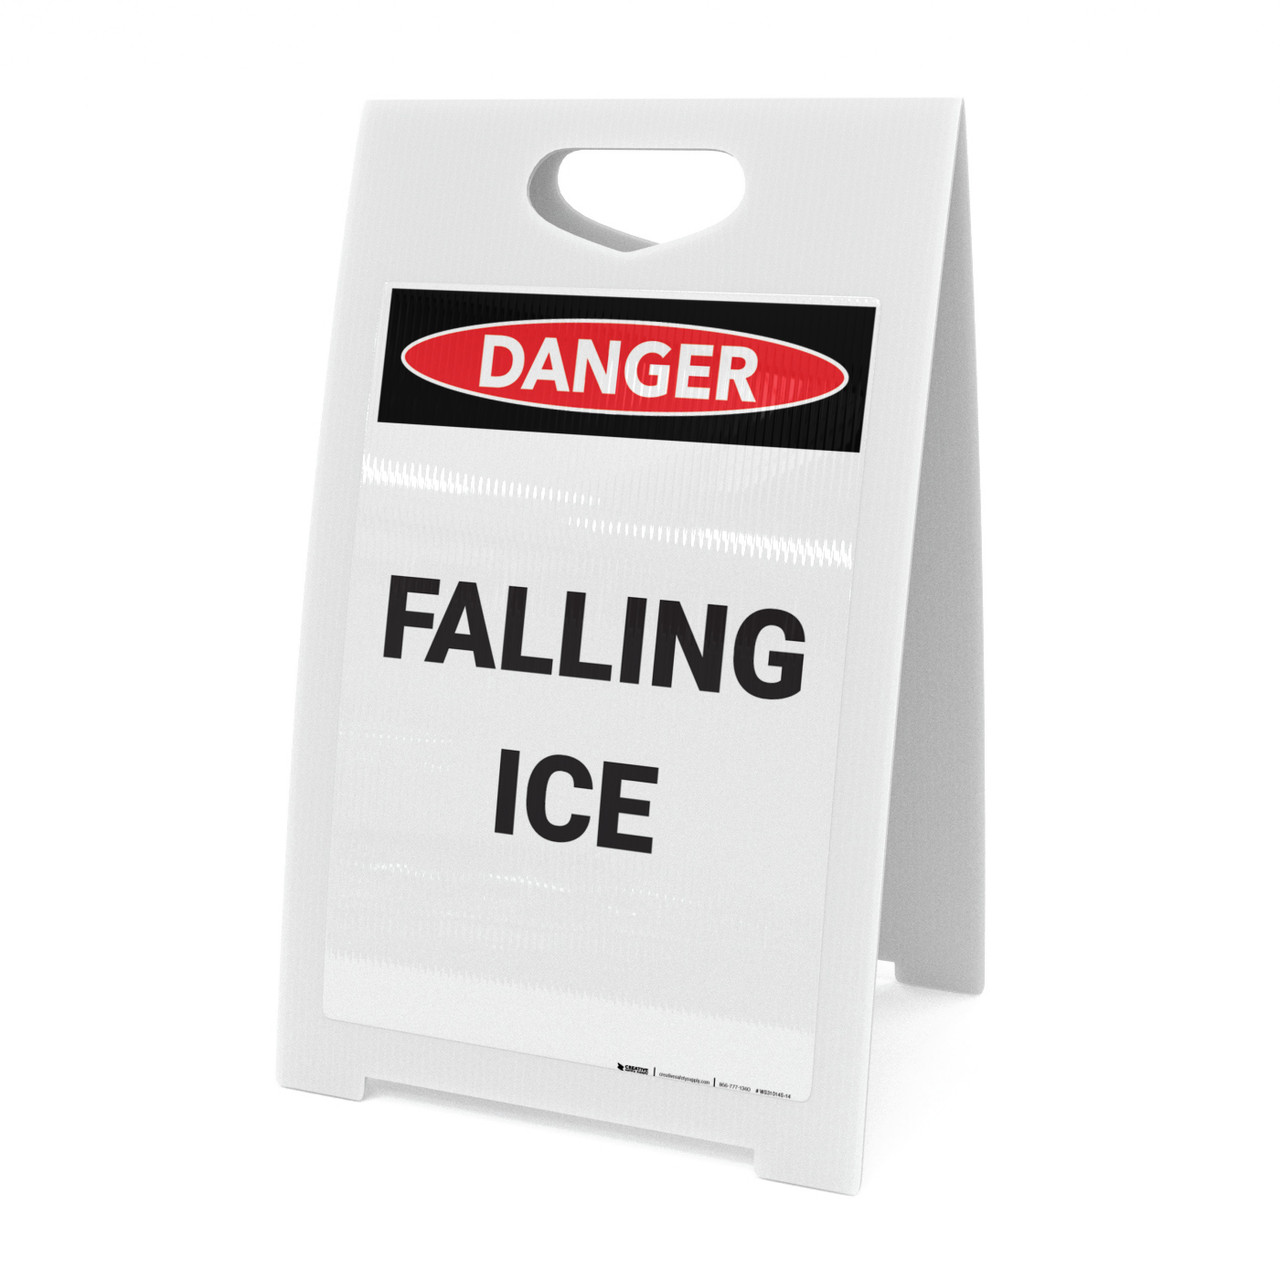 Notice Sign - Do Not Leave Ice Scoop In Ice Bin - OSHA